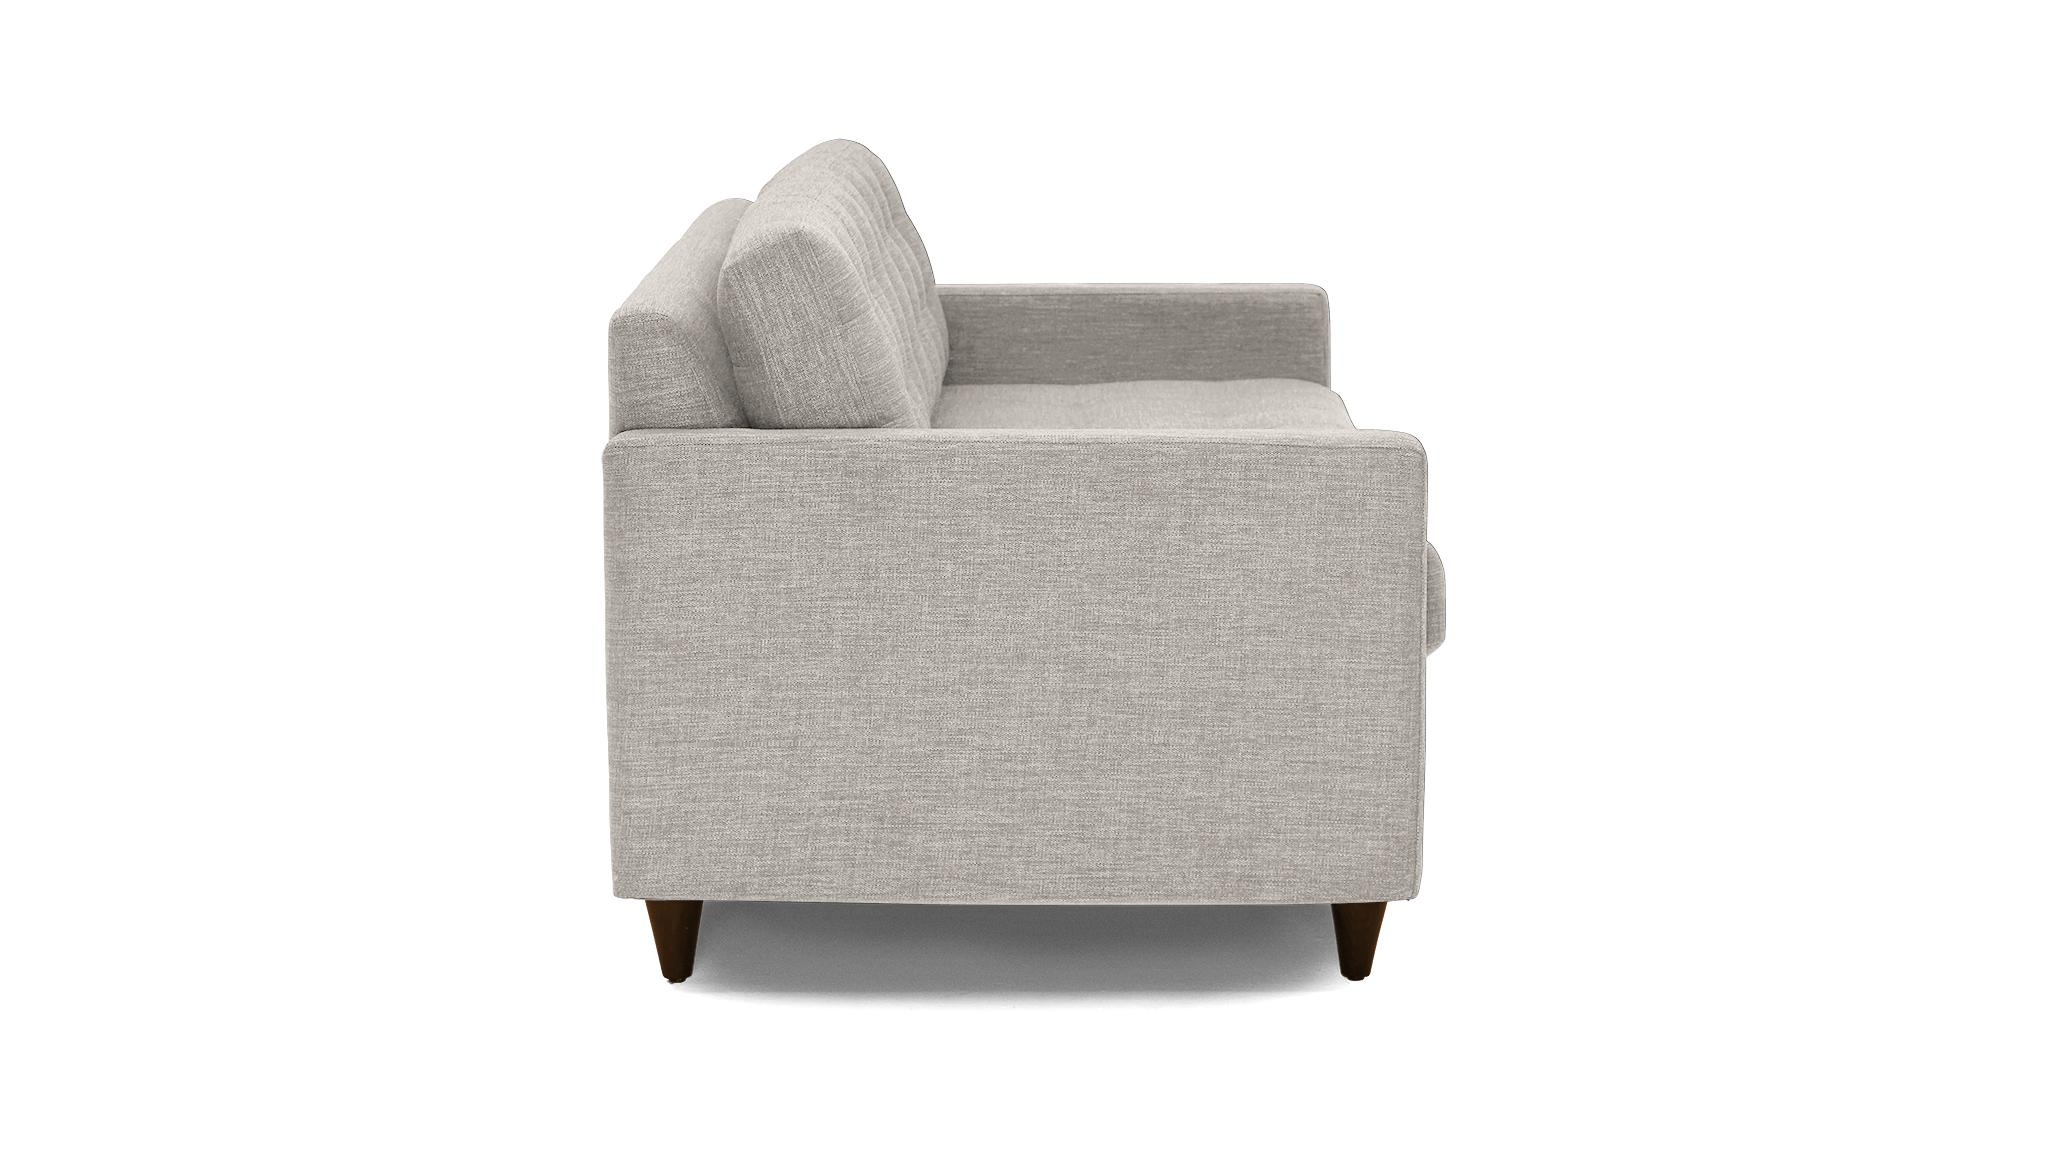 Beige/White Eliot Mid Century Modern Sleeper Sofa - Prime Stone - Mocha - Foam - Image 2